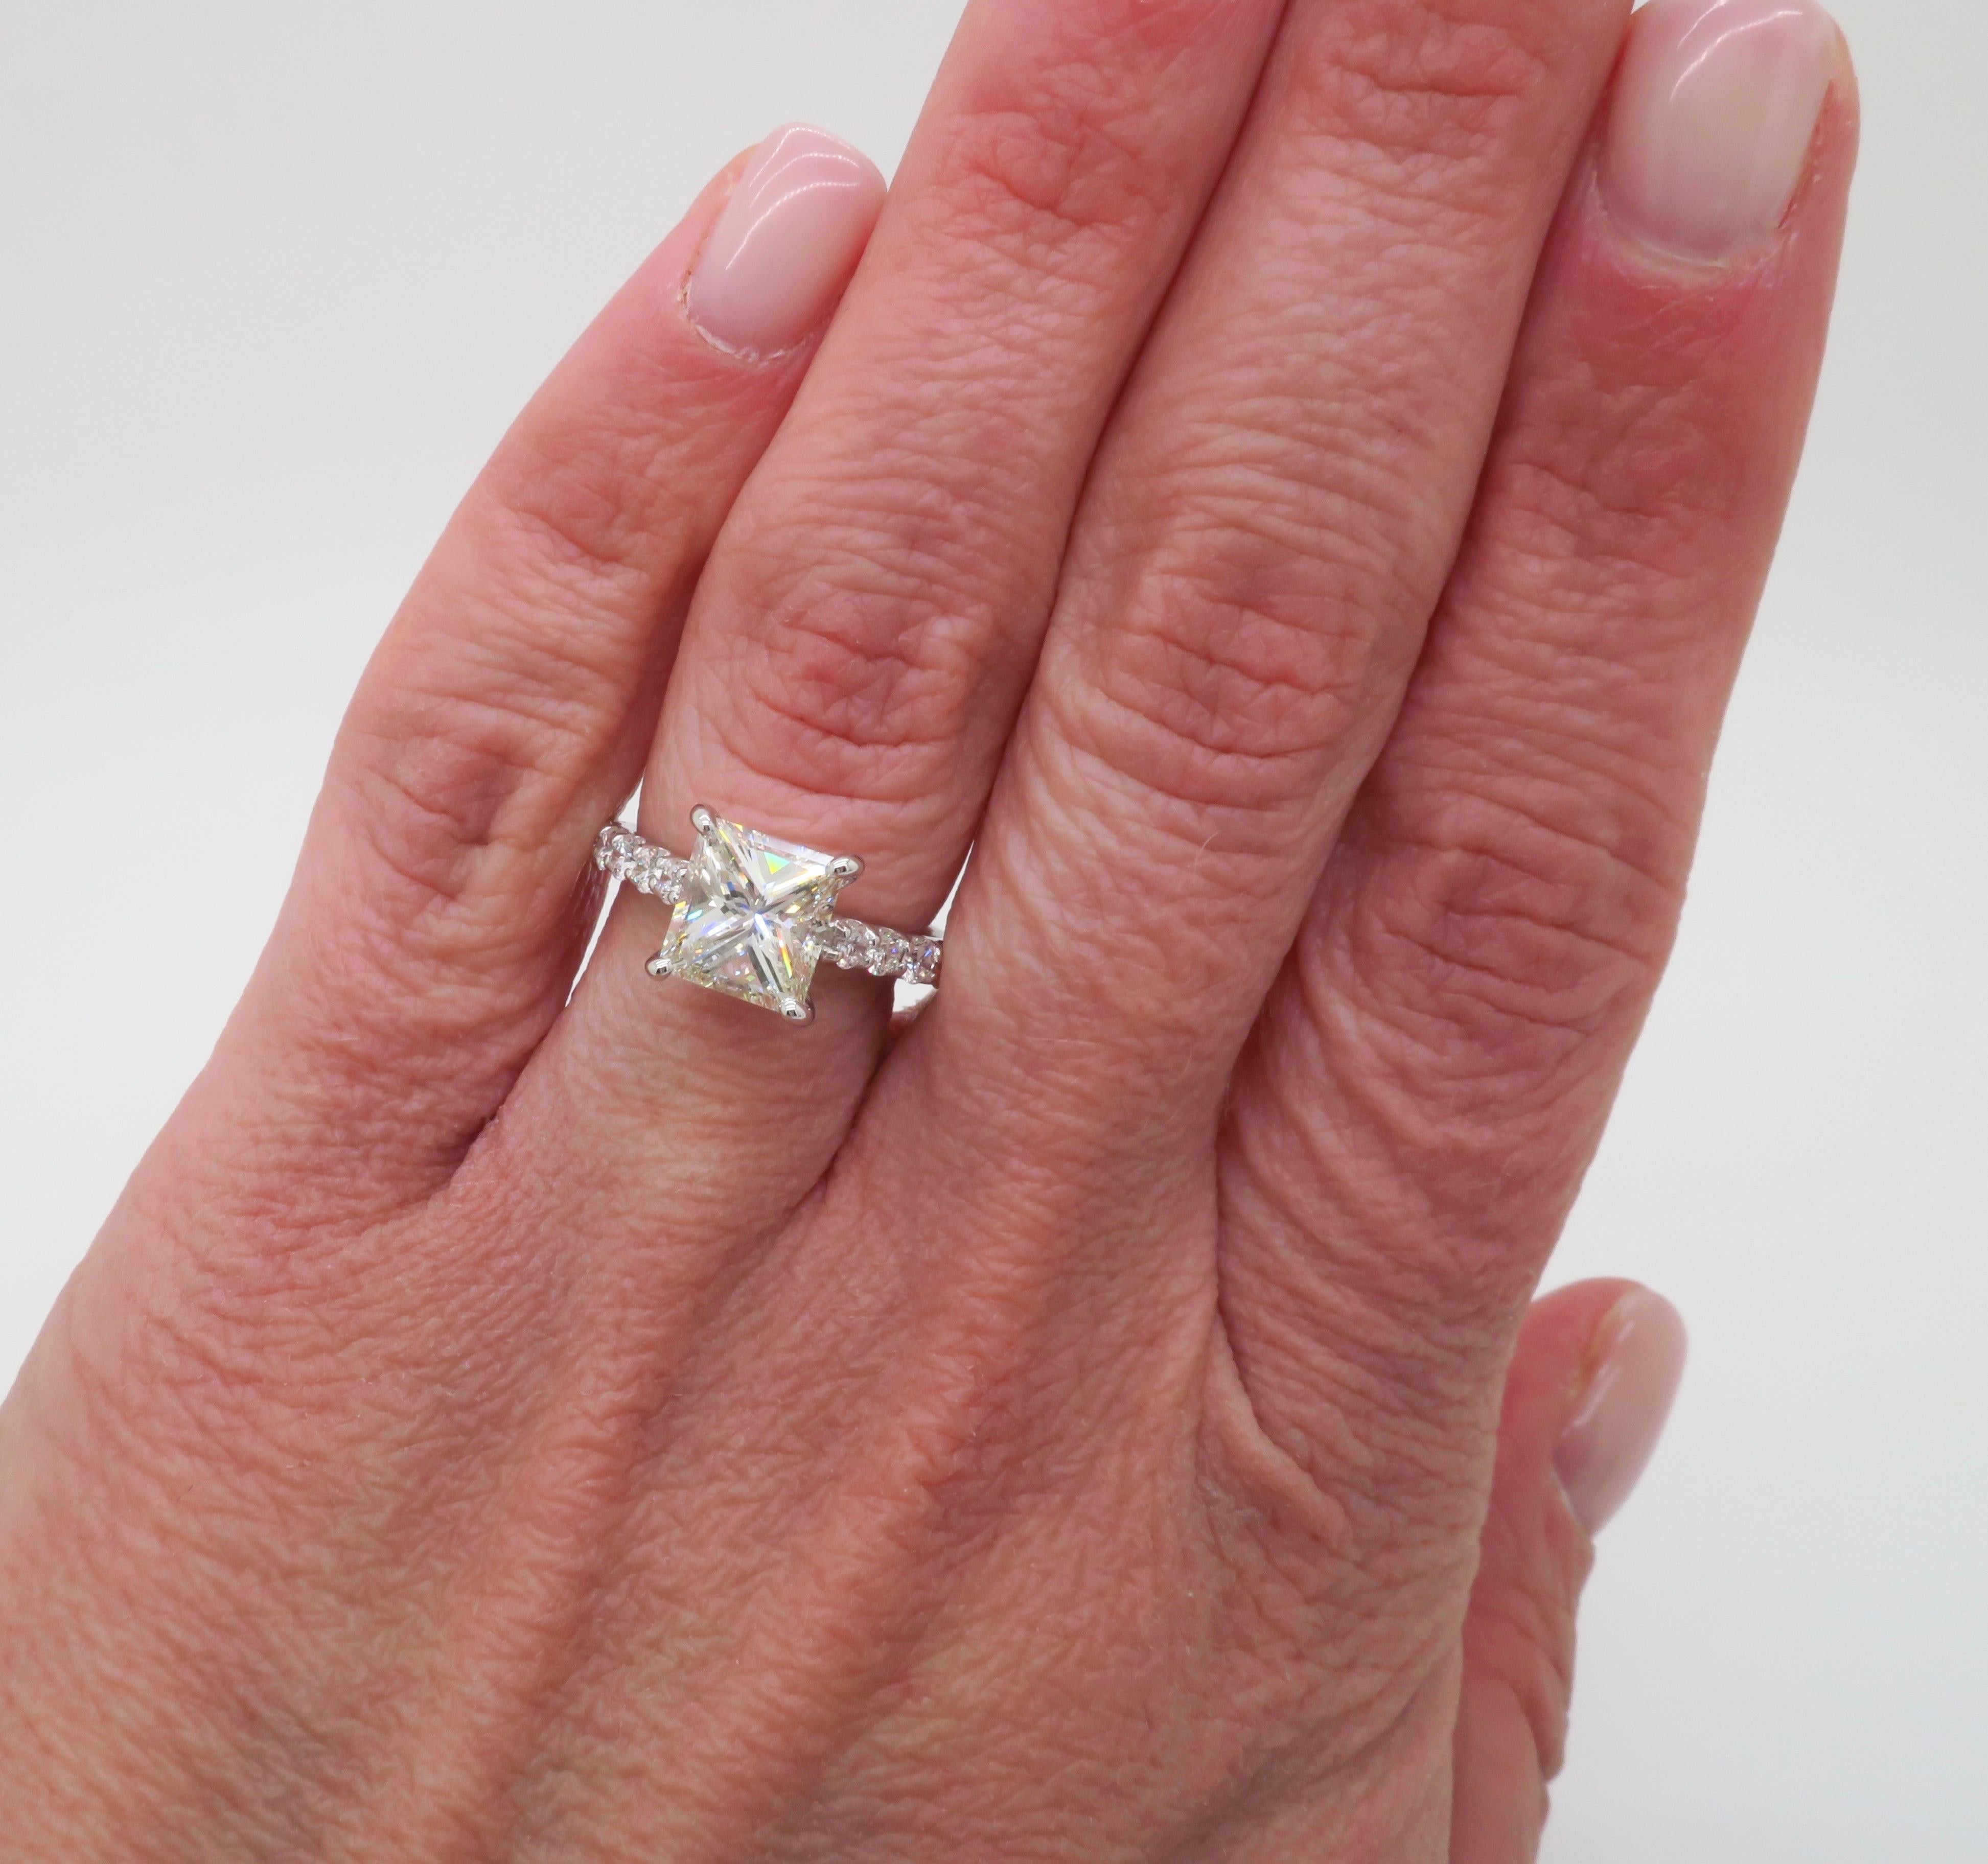 GIA Certified 2.62ct Princess cut diamond ring made in 14k white gold. 

Center Diamond Carat Weight: 2.02CT 
Center Diamond Cut: Princess 
Center Diamond Color: J
Center Diamond Clarity: SI1
Certification: GIA - 2235226030
Total Diamond Carat